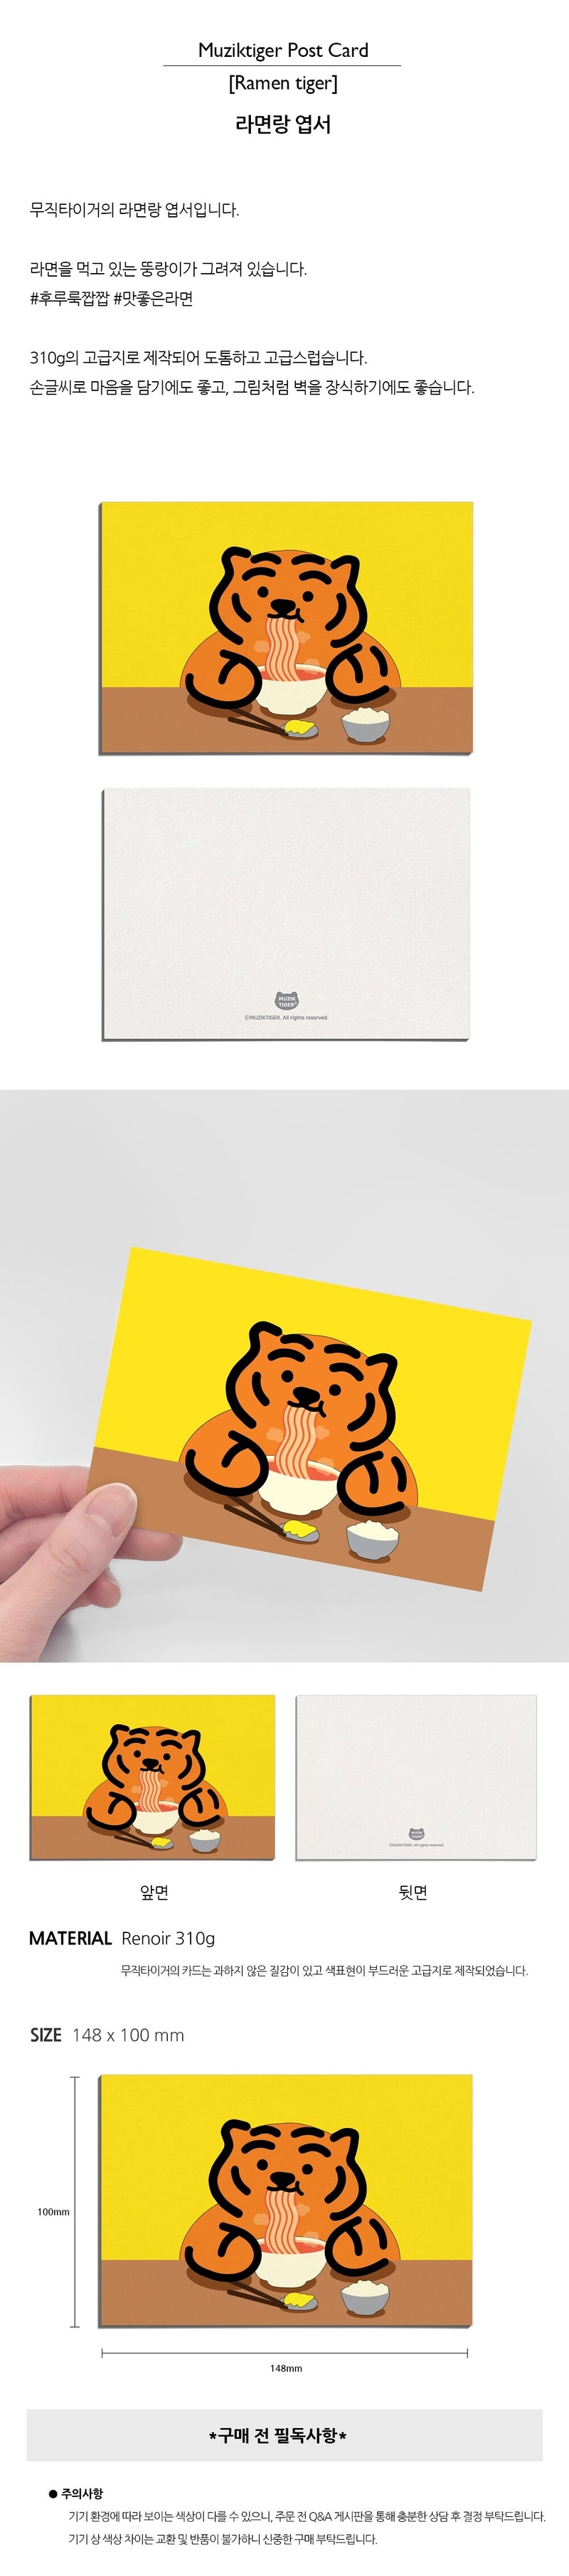 Ramen tiger ポストカード